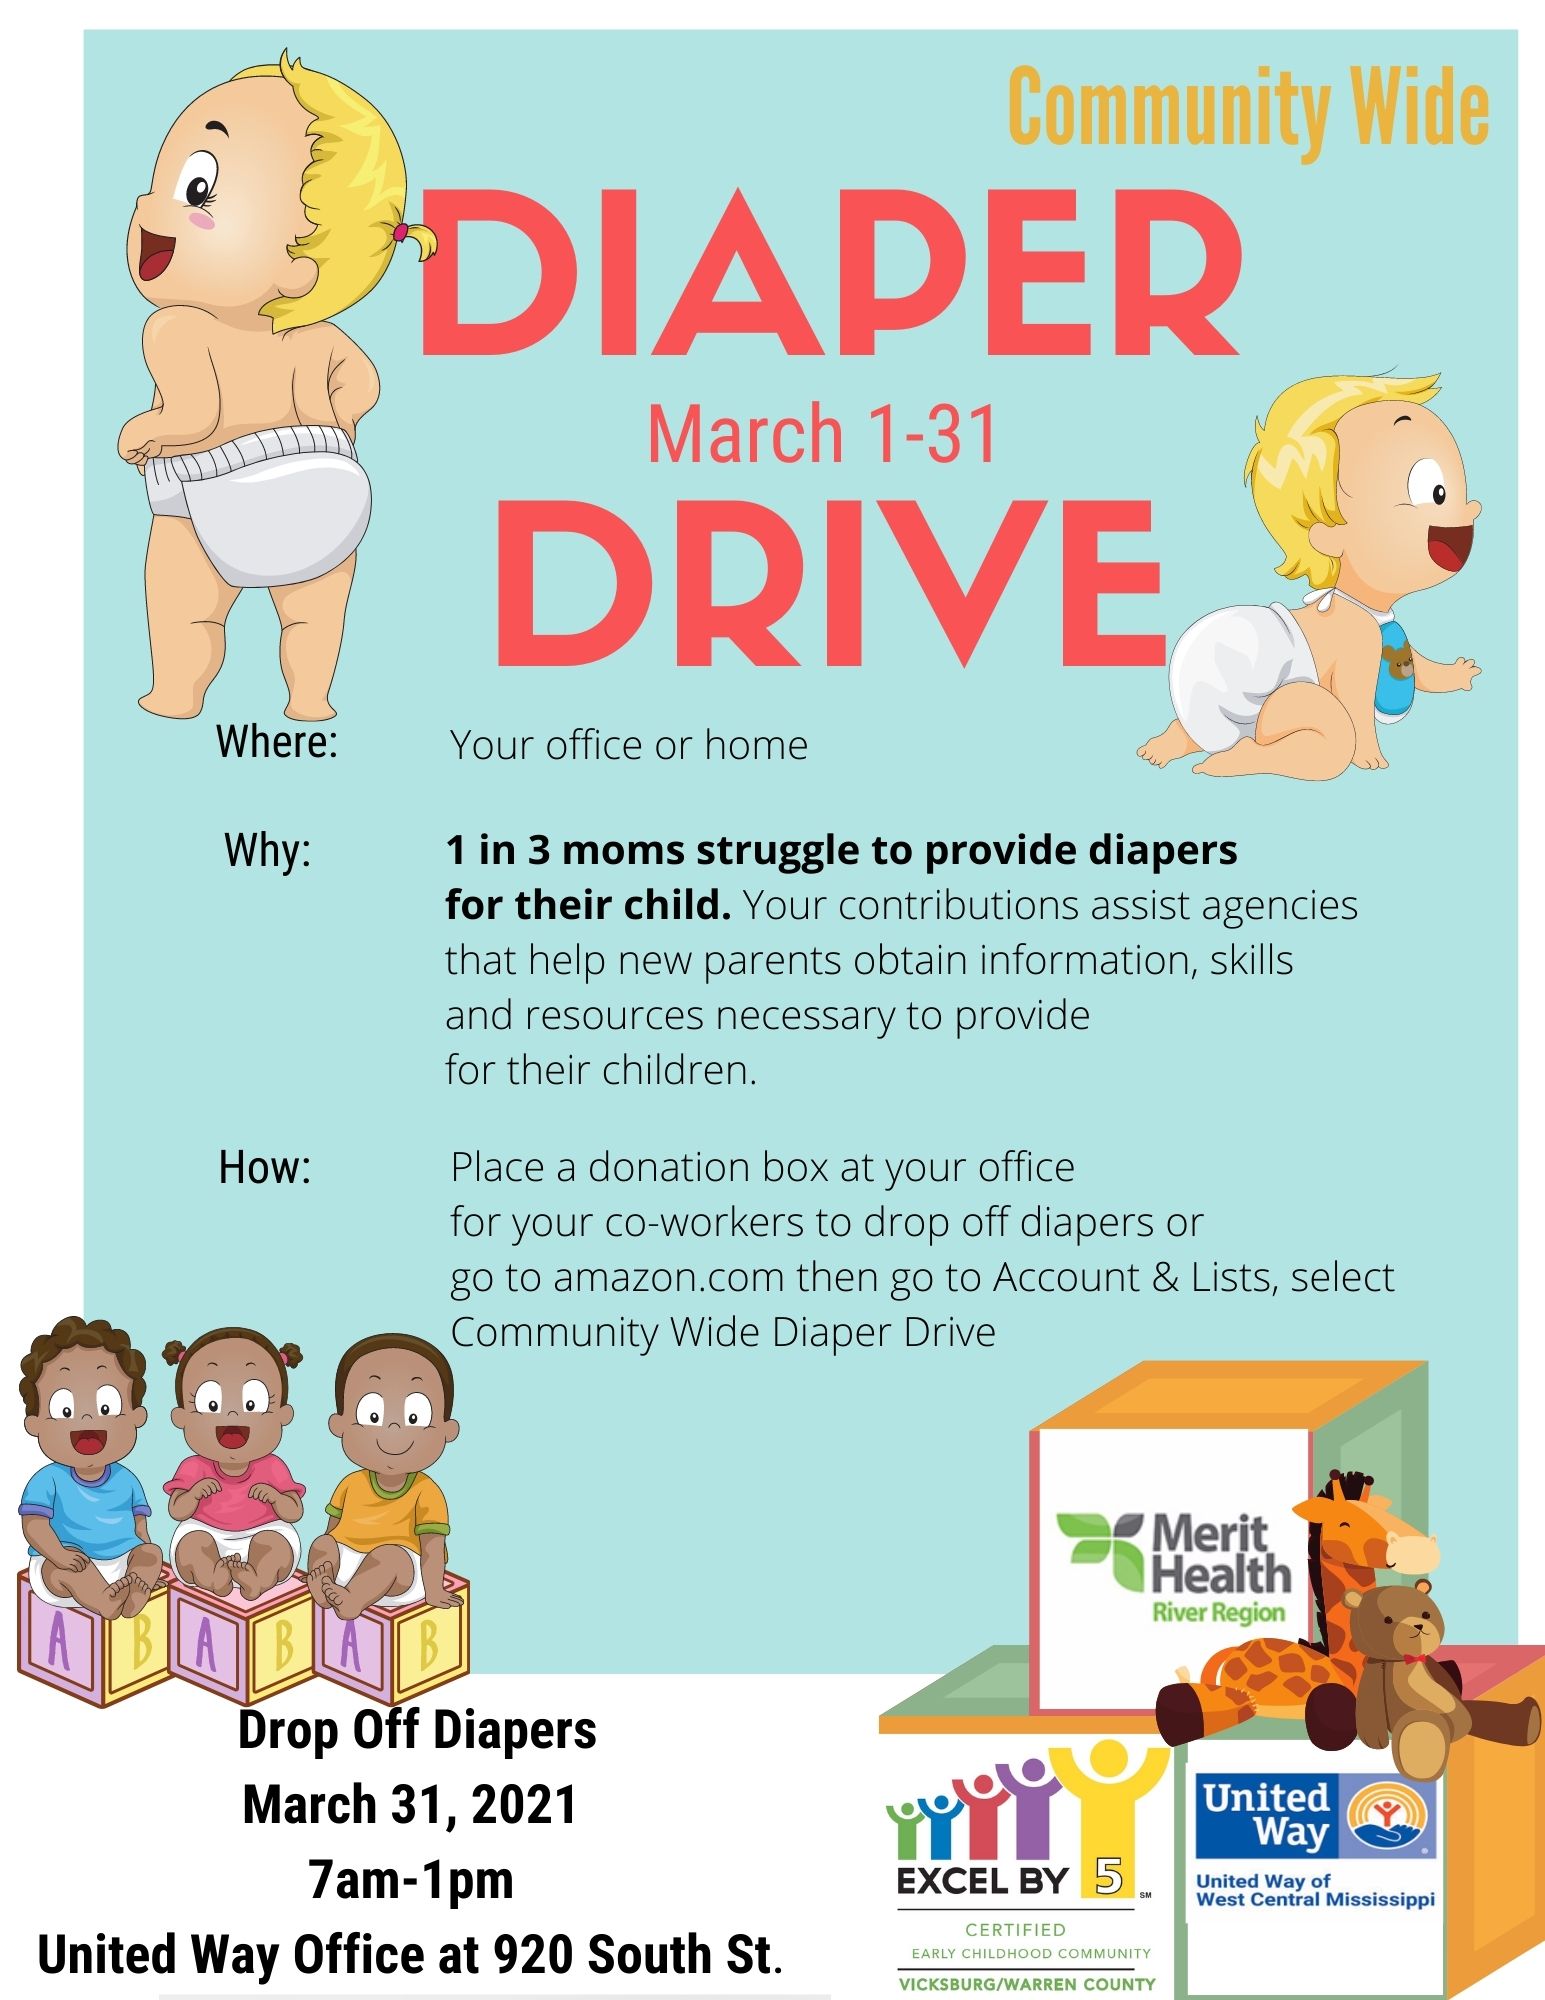 Community Wide Diaper Drive